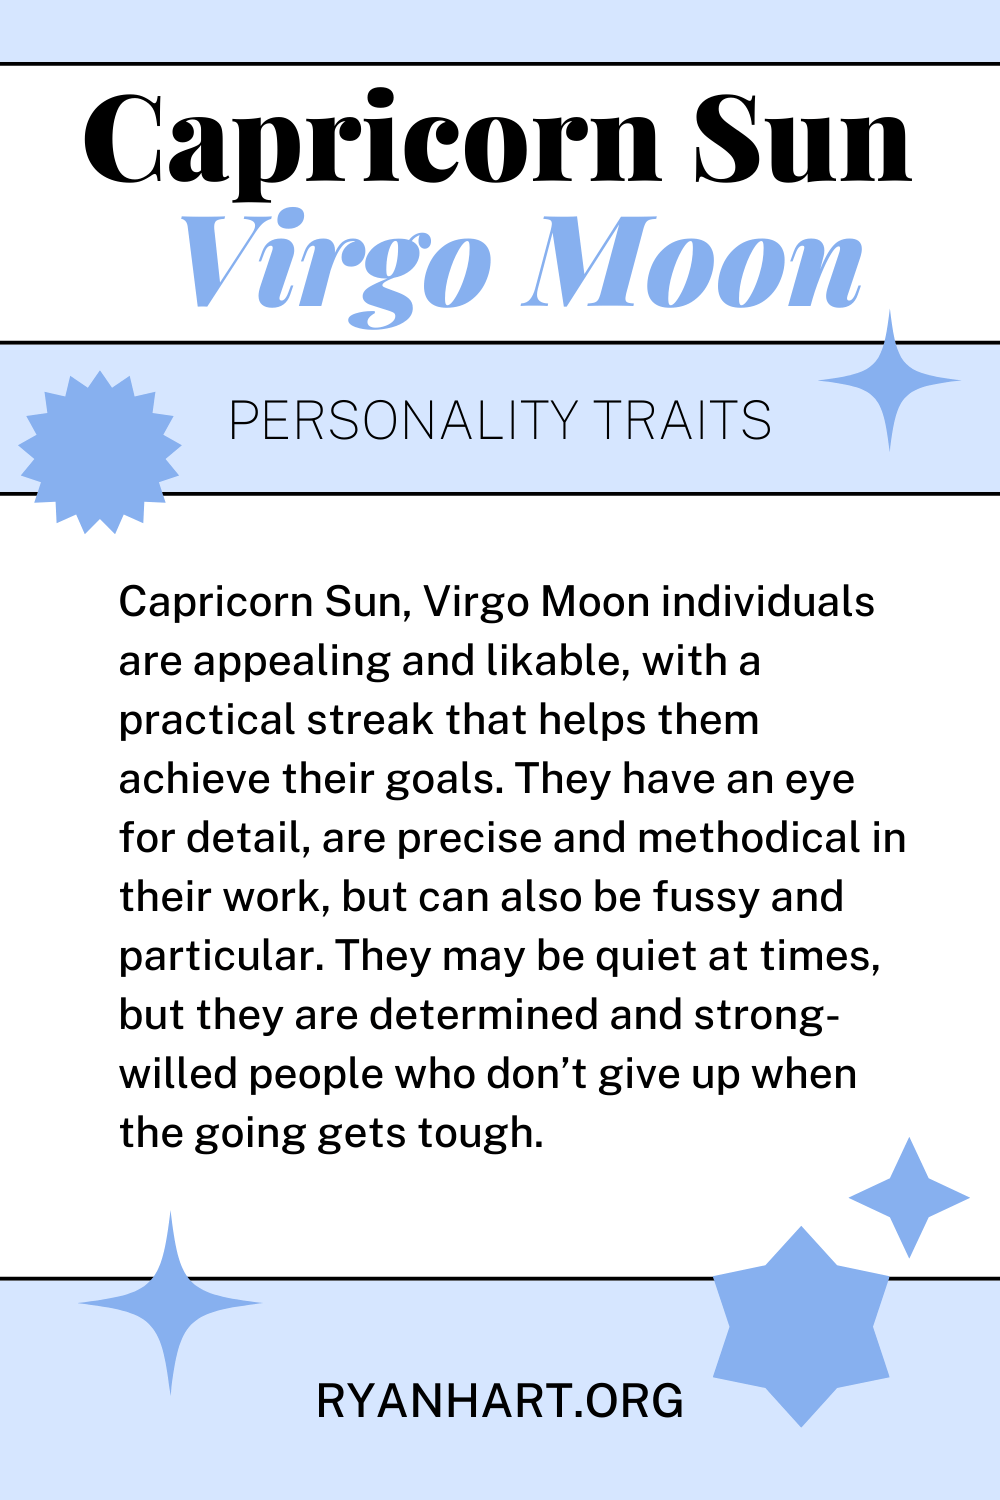 Capricorn Sun Virgo Moon Description